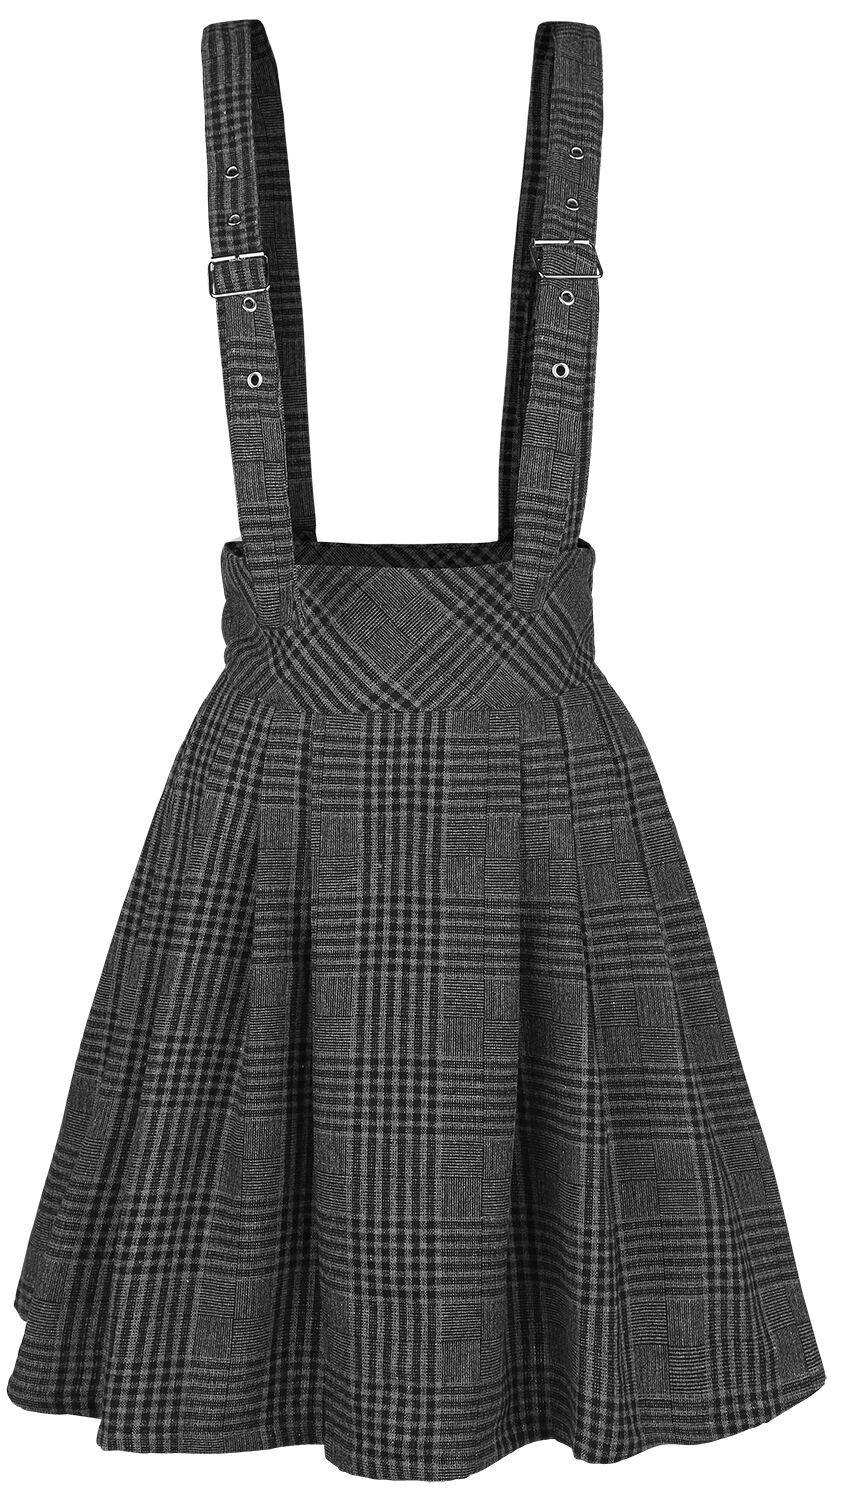 Jawbreaker - Rockabilly Kurzer Rock - Grey Days High Waisted Skirt - S bis XL - für Damen - Größe L - grau